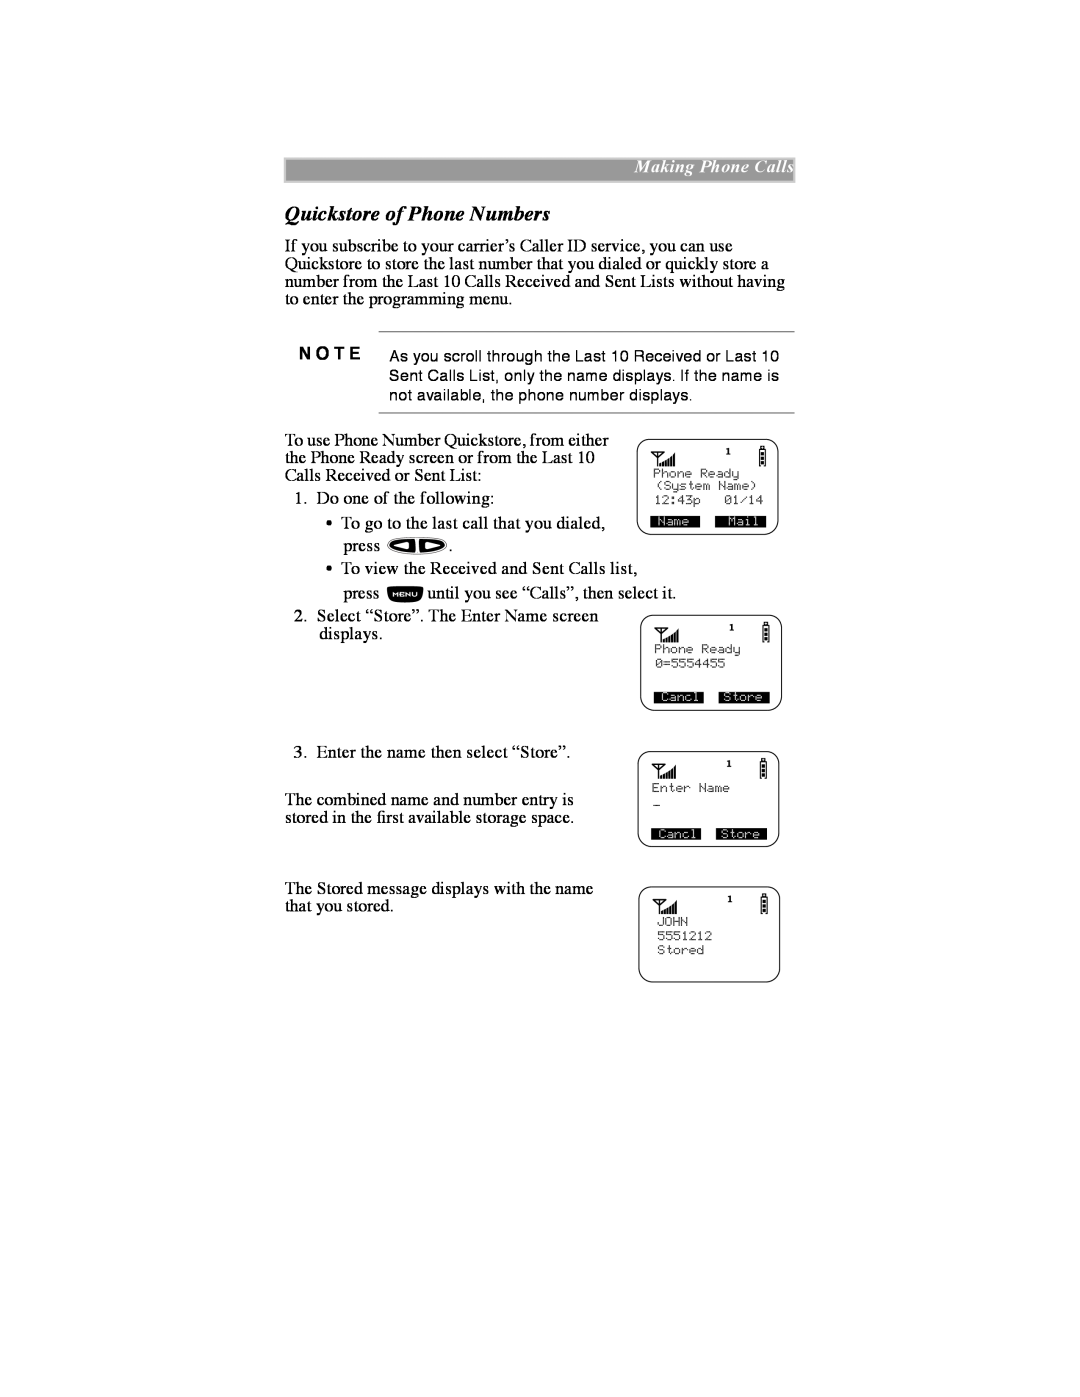 Motorola iDEN manual Quickstore of Phone Numbers, Making Phone Calls, N O T E 